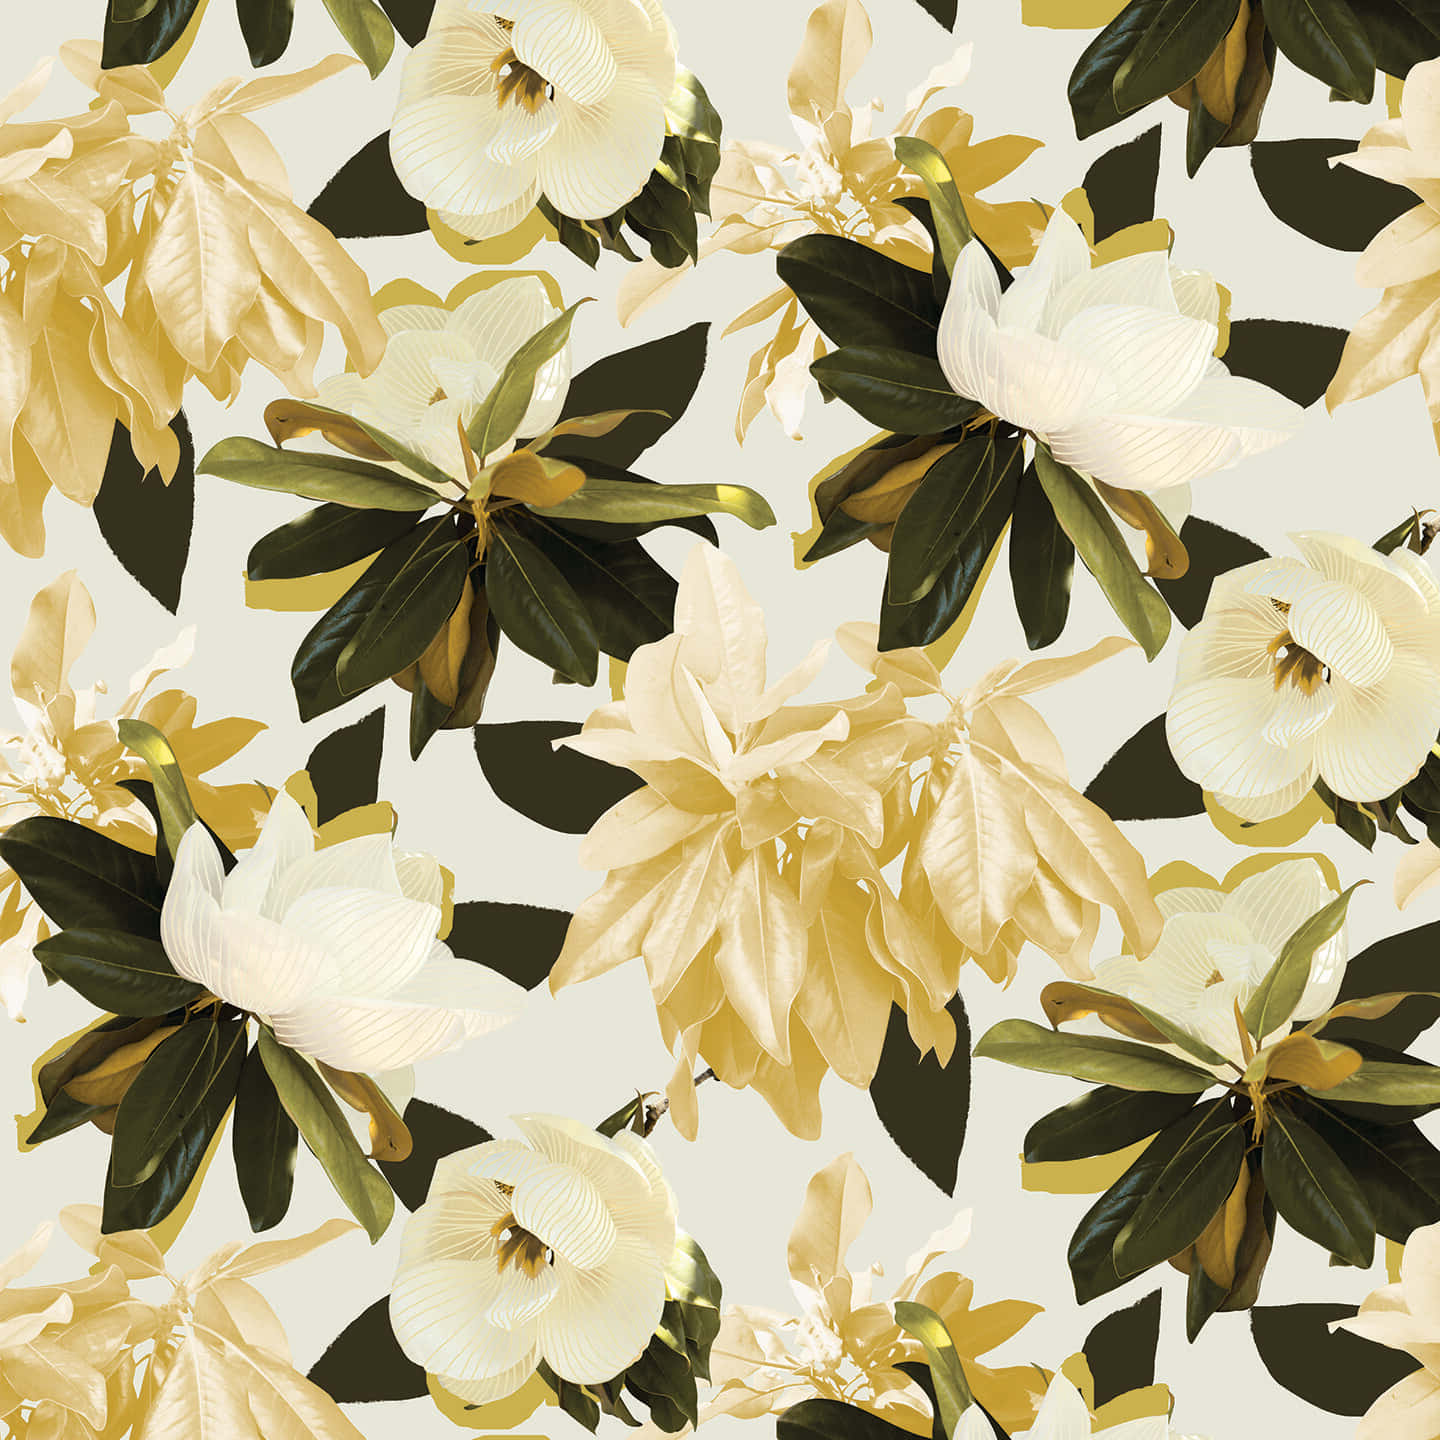 Artistic Illustration of Magnolia Flower Wallpaper